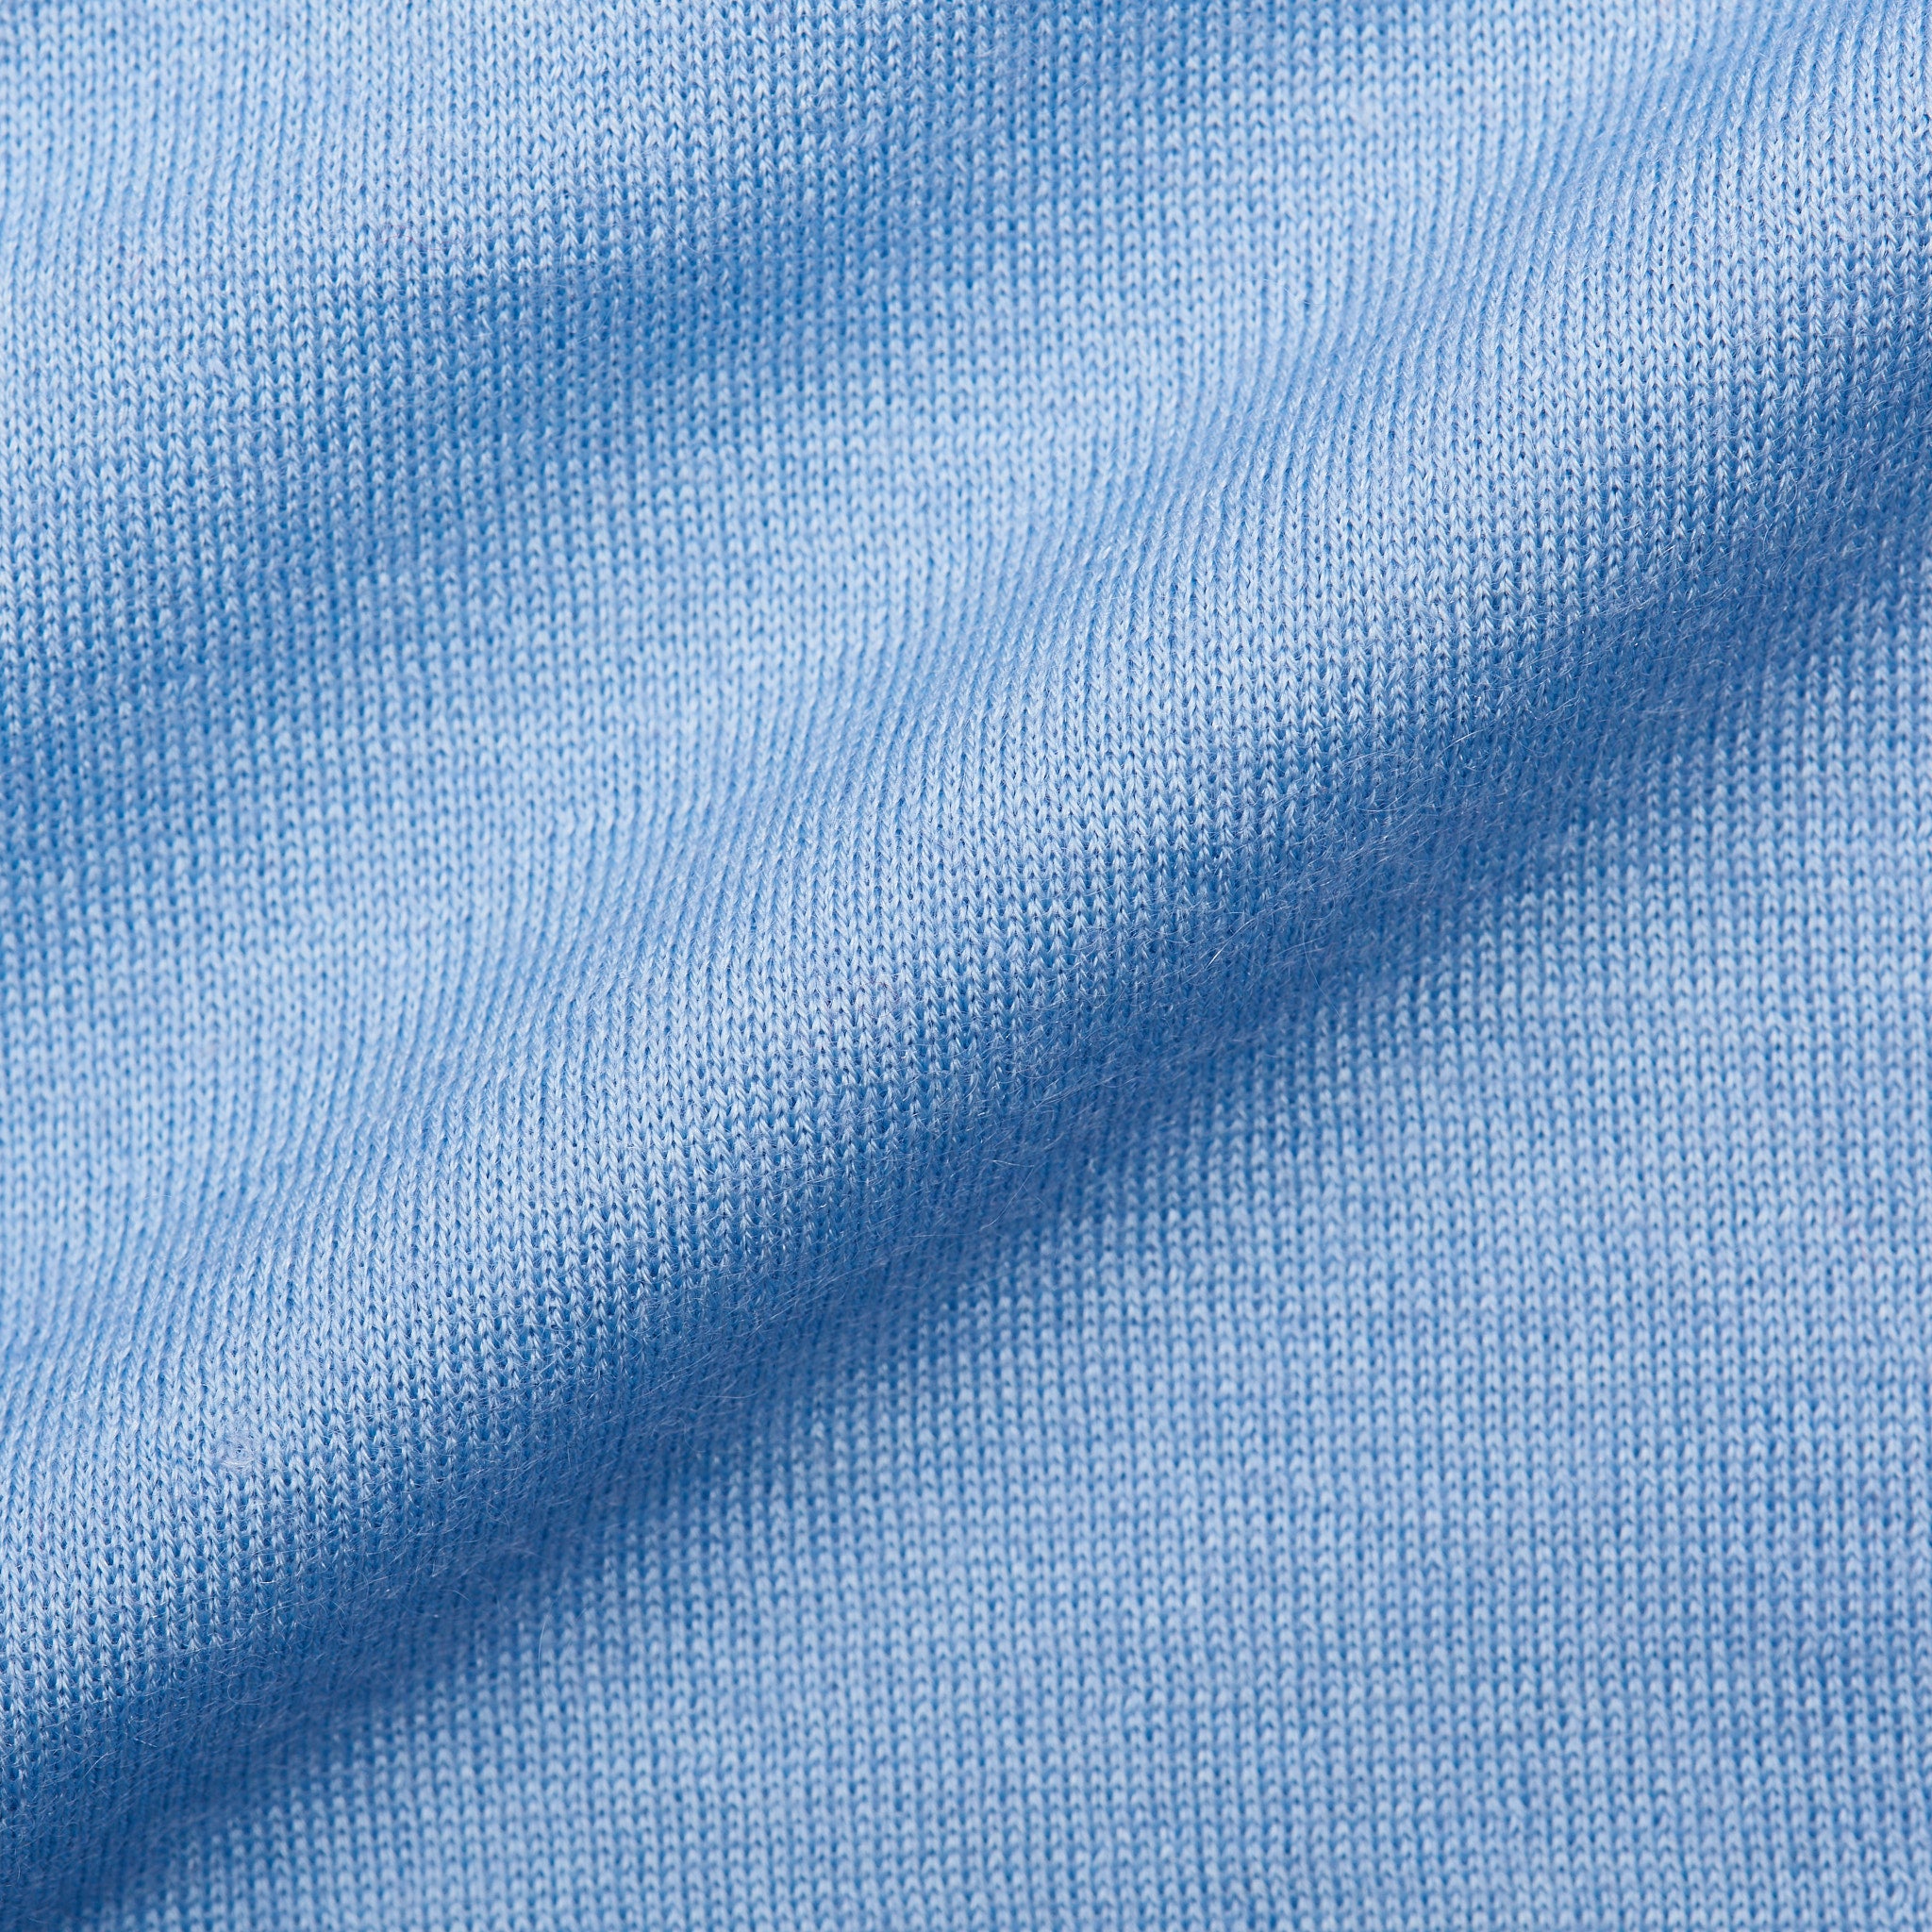 FEDELI Millionaire Blue Super Cashmere-Silk Crewneck Sweater 44 NEW US XXS FEDELI